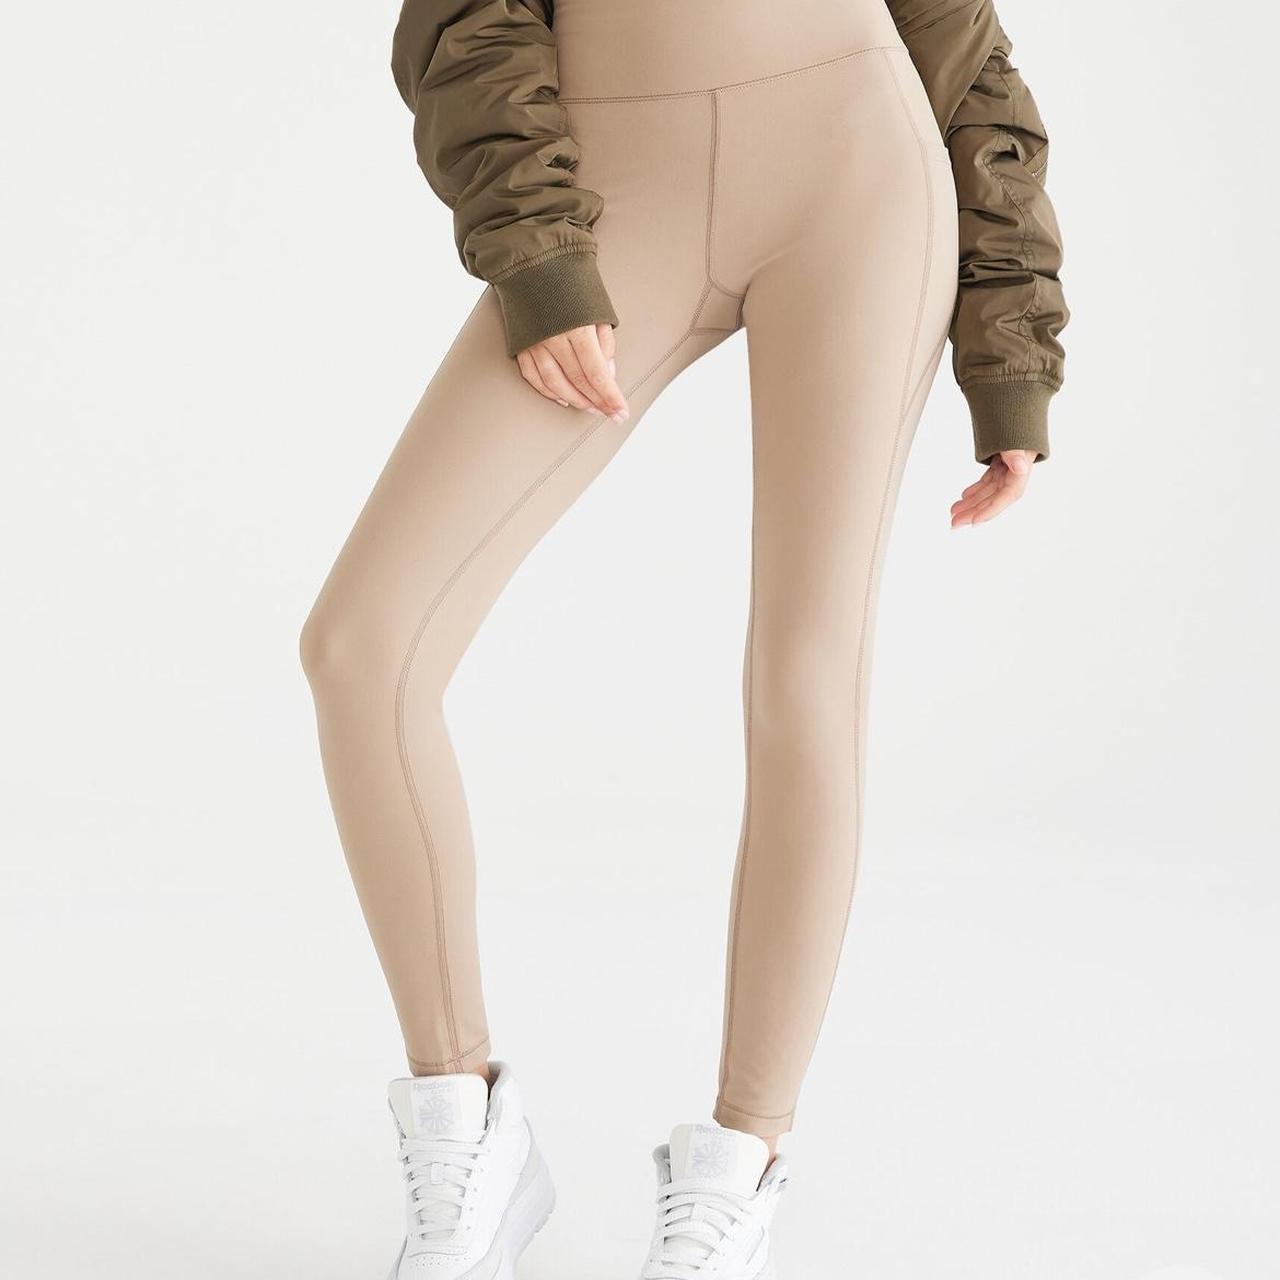 aeropostale leggings with pockets size s - Depop